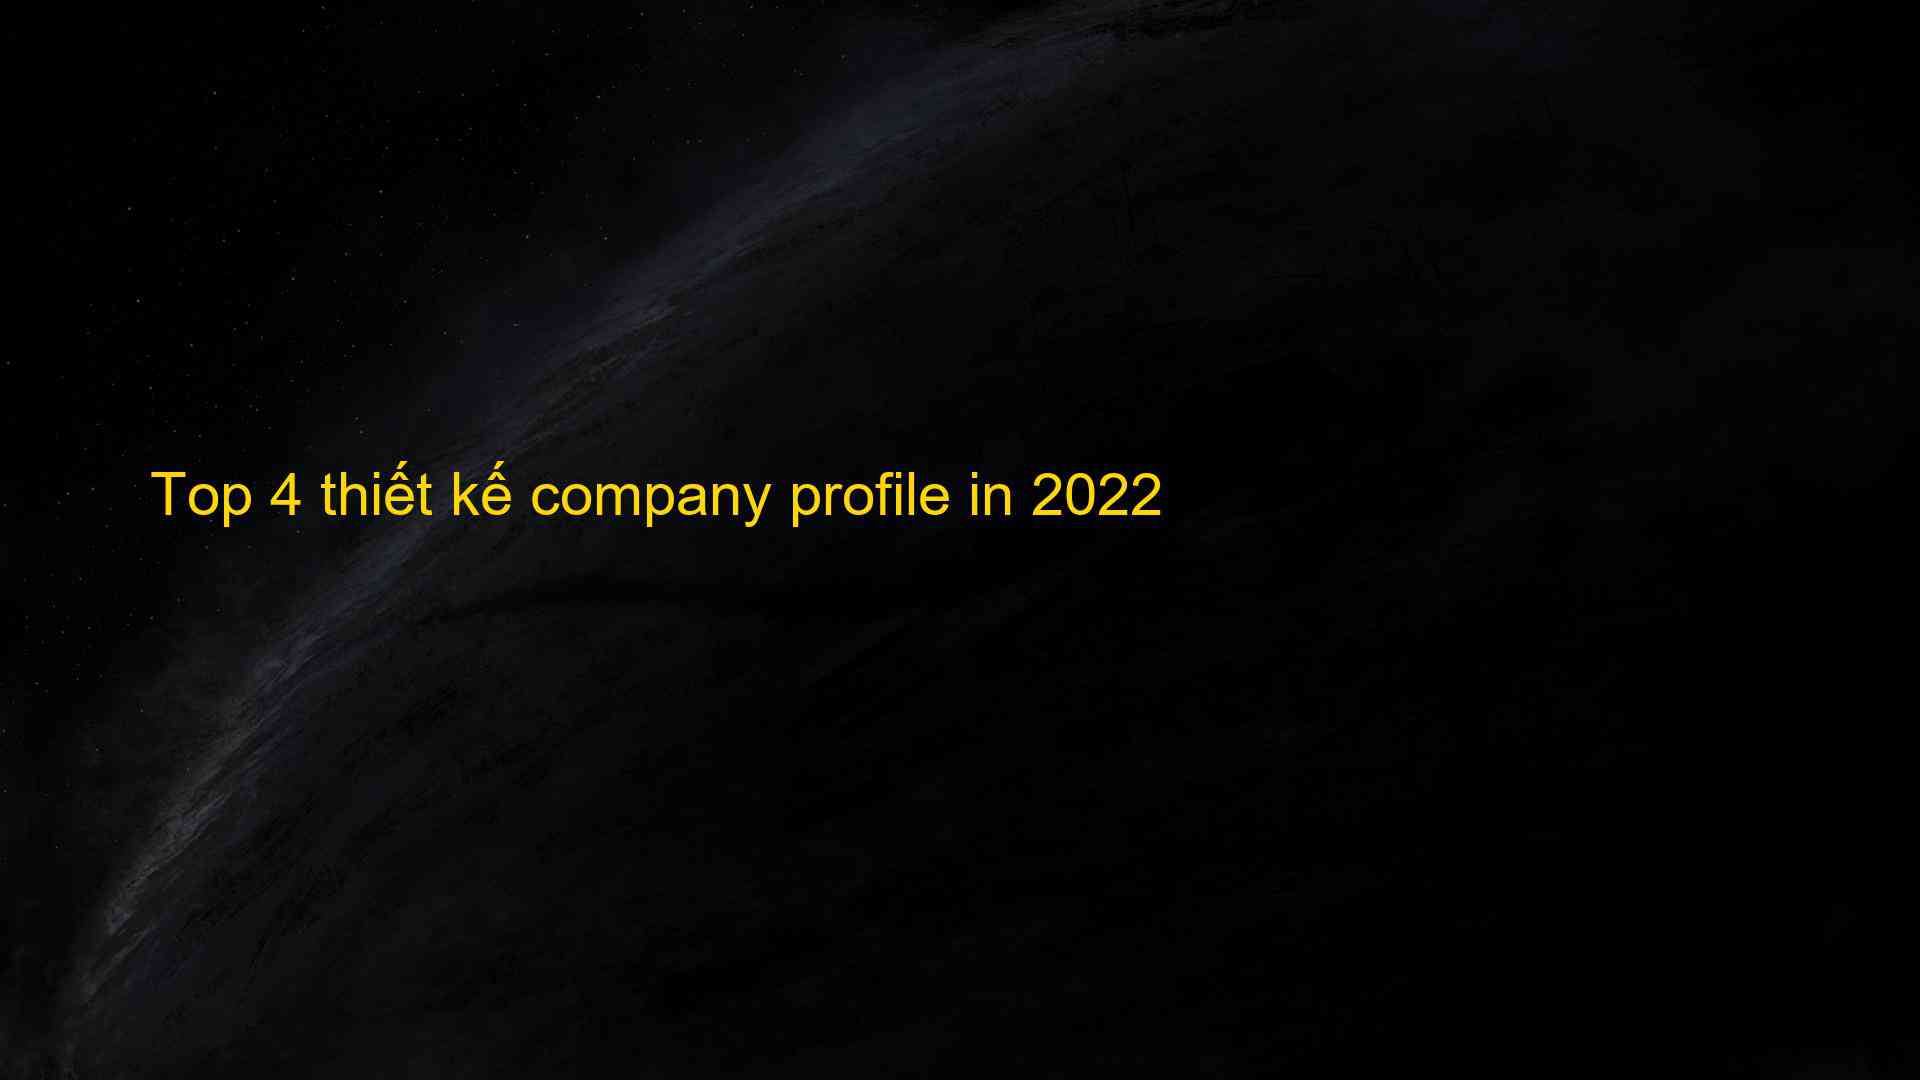 Top 4 thiet ke company profile in 2022 1660114224